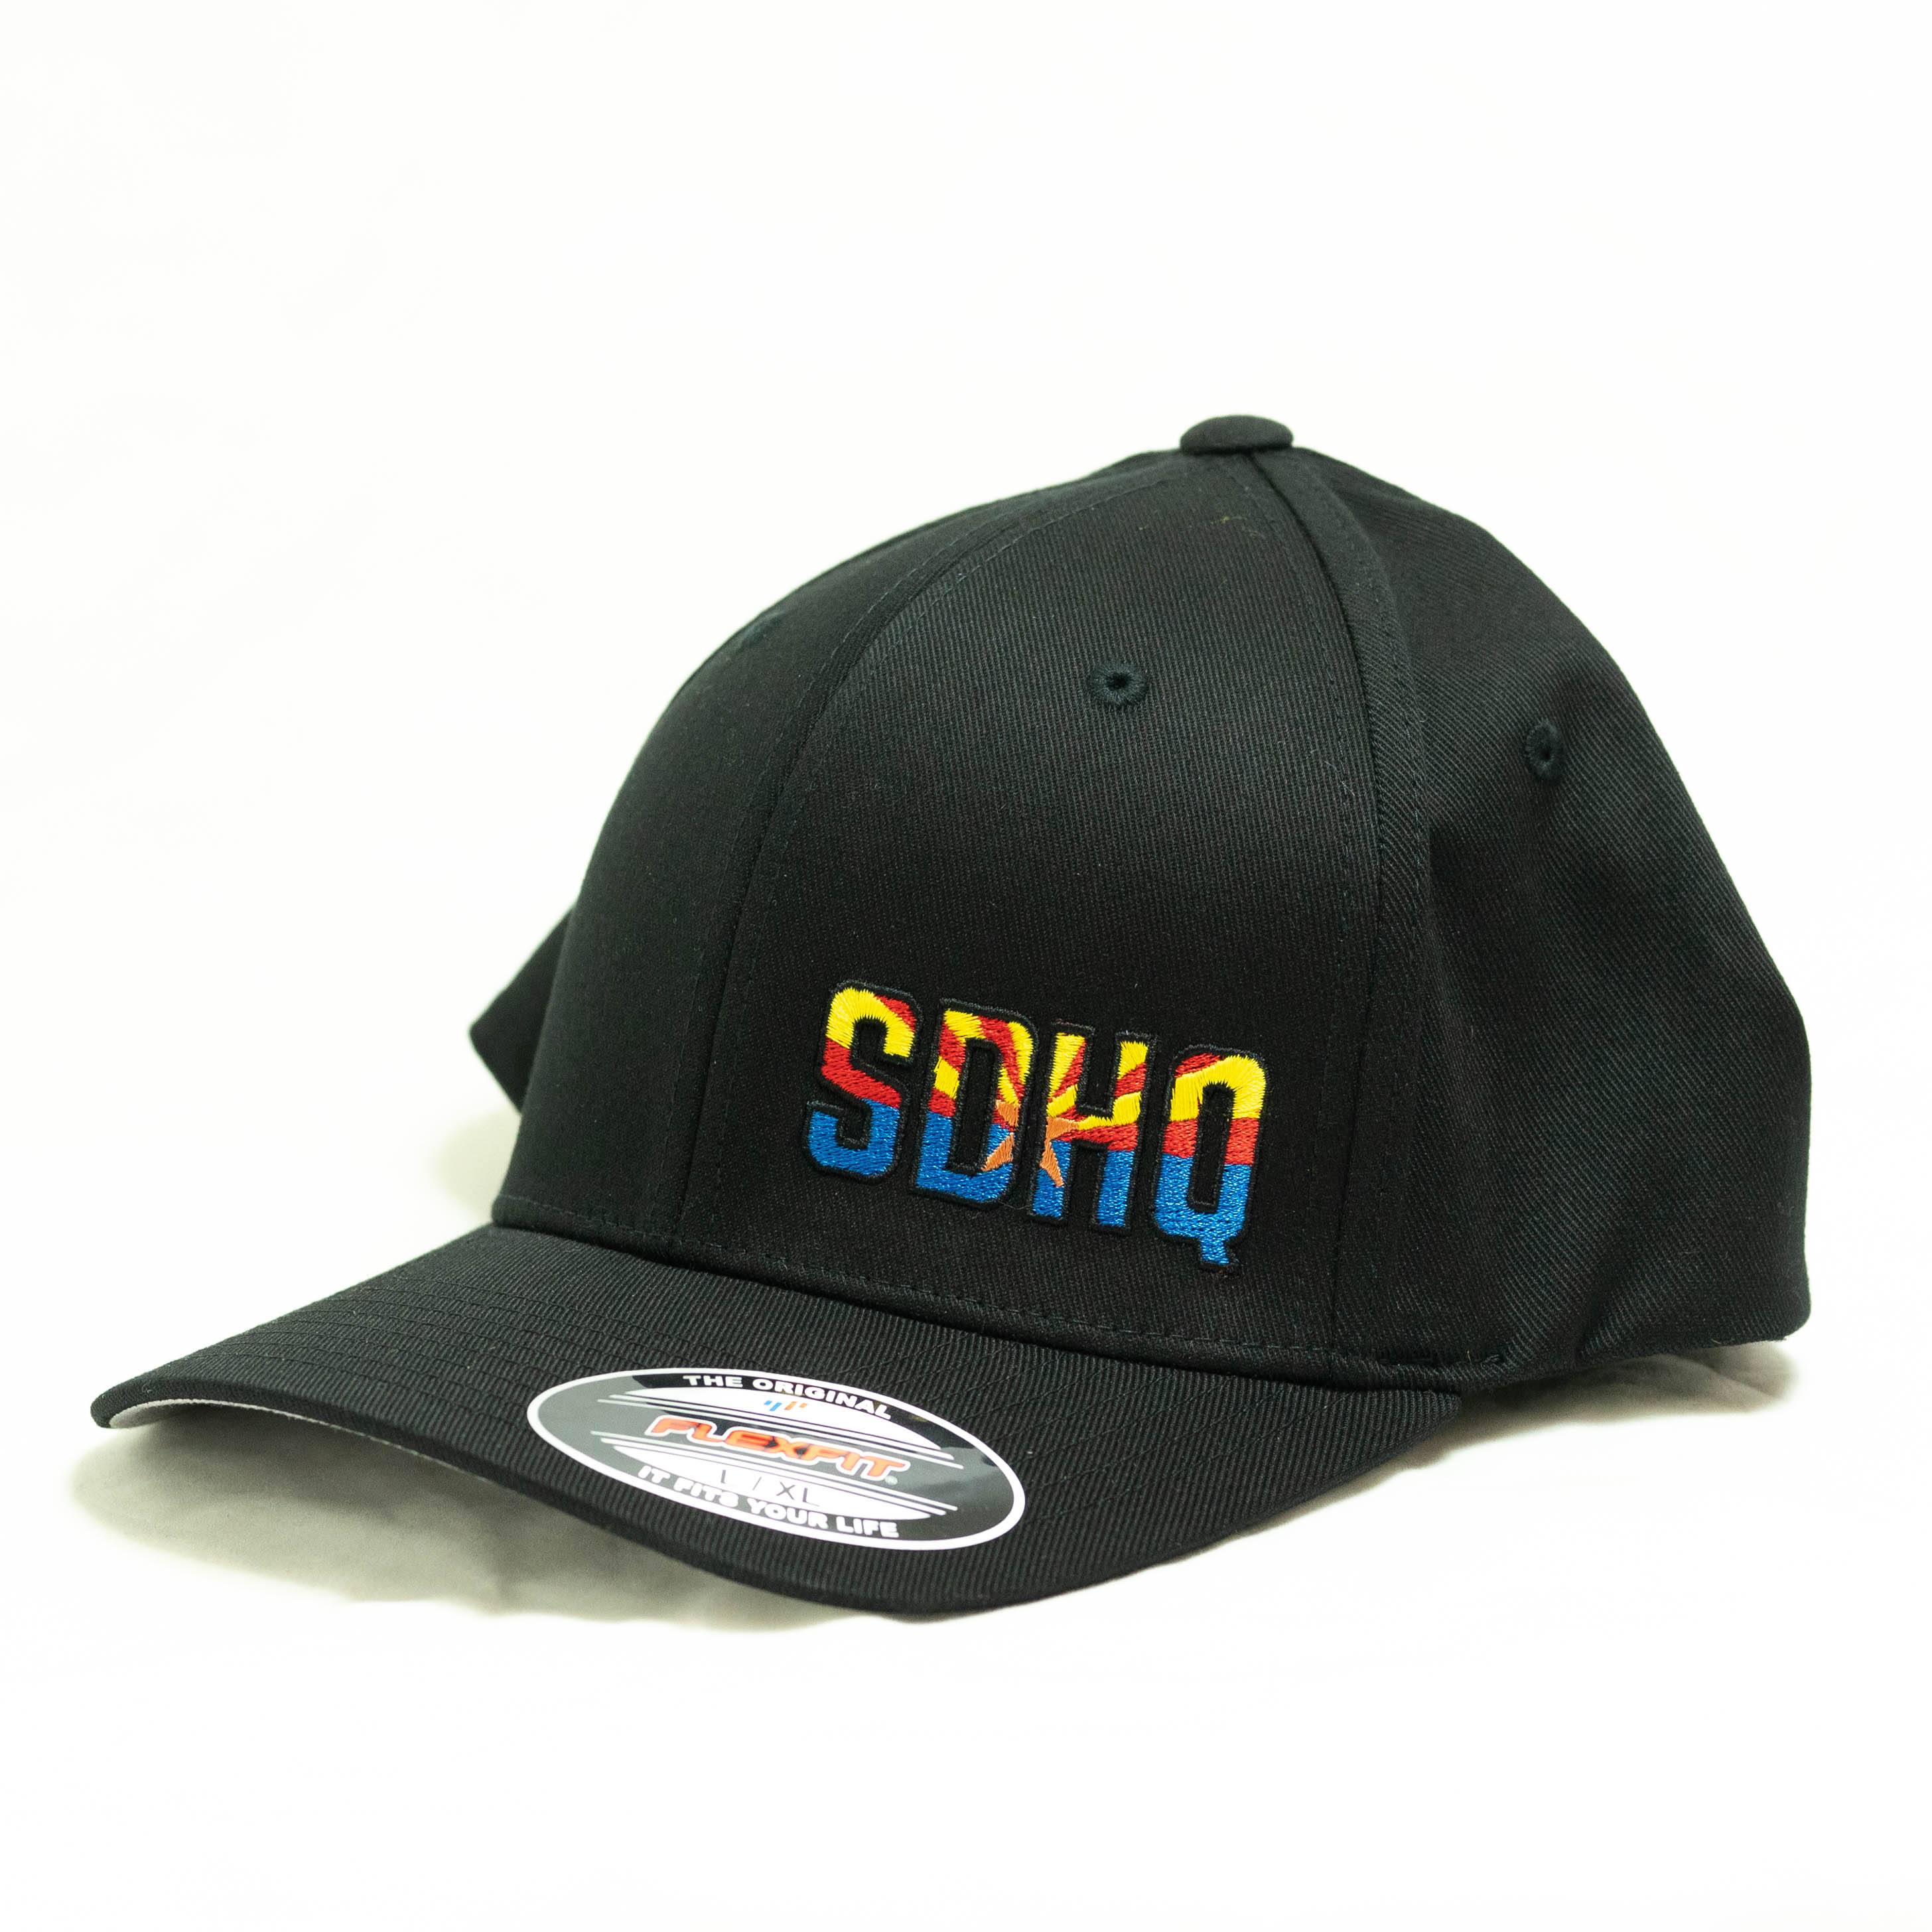 SDHQ Arizona Black Flex Fit Hat Apparel SDHQ Off Road